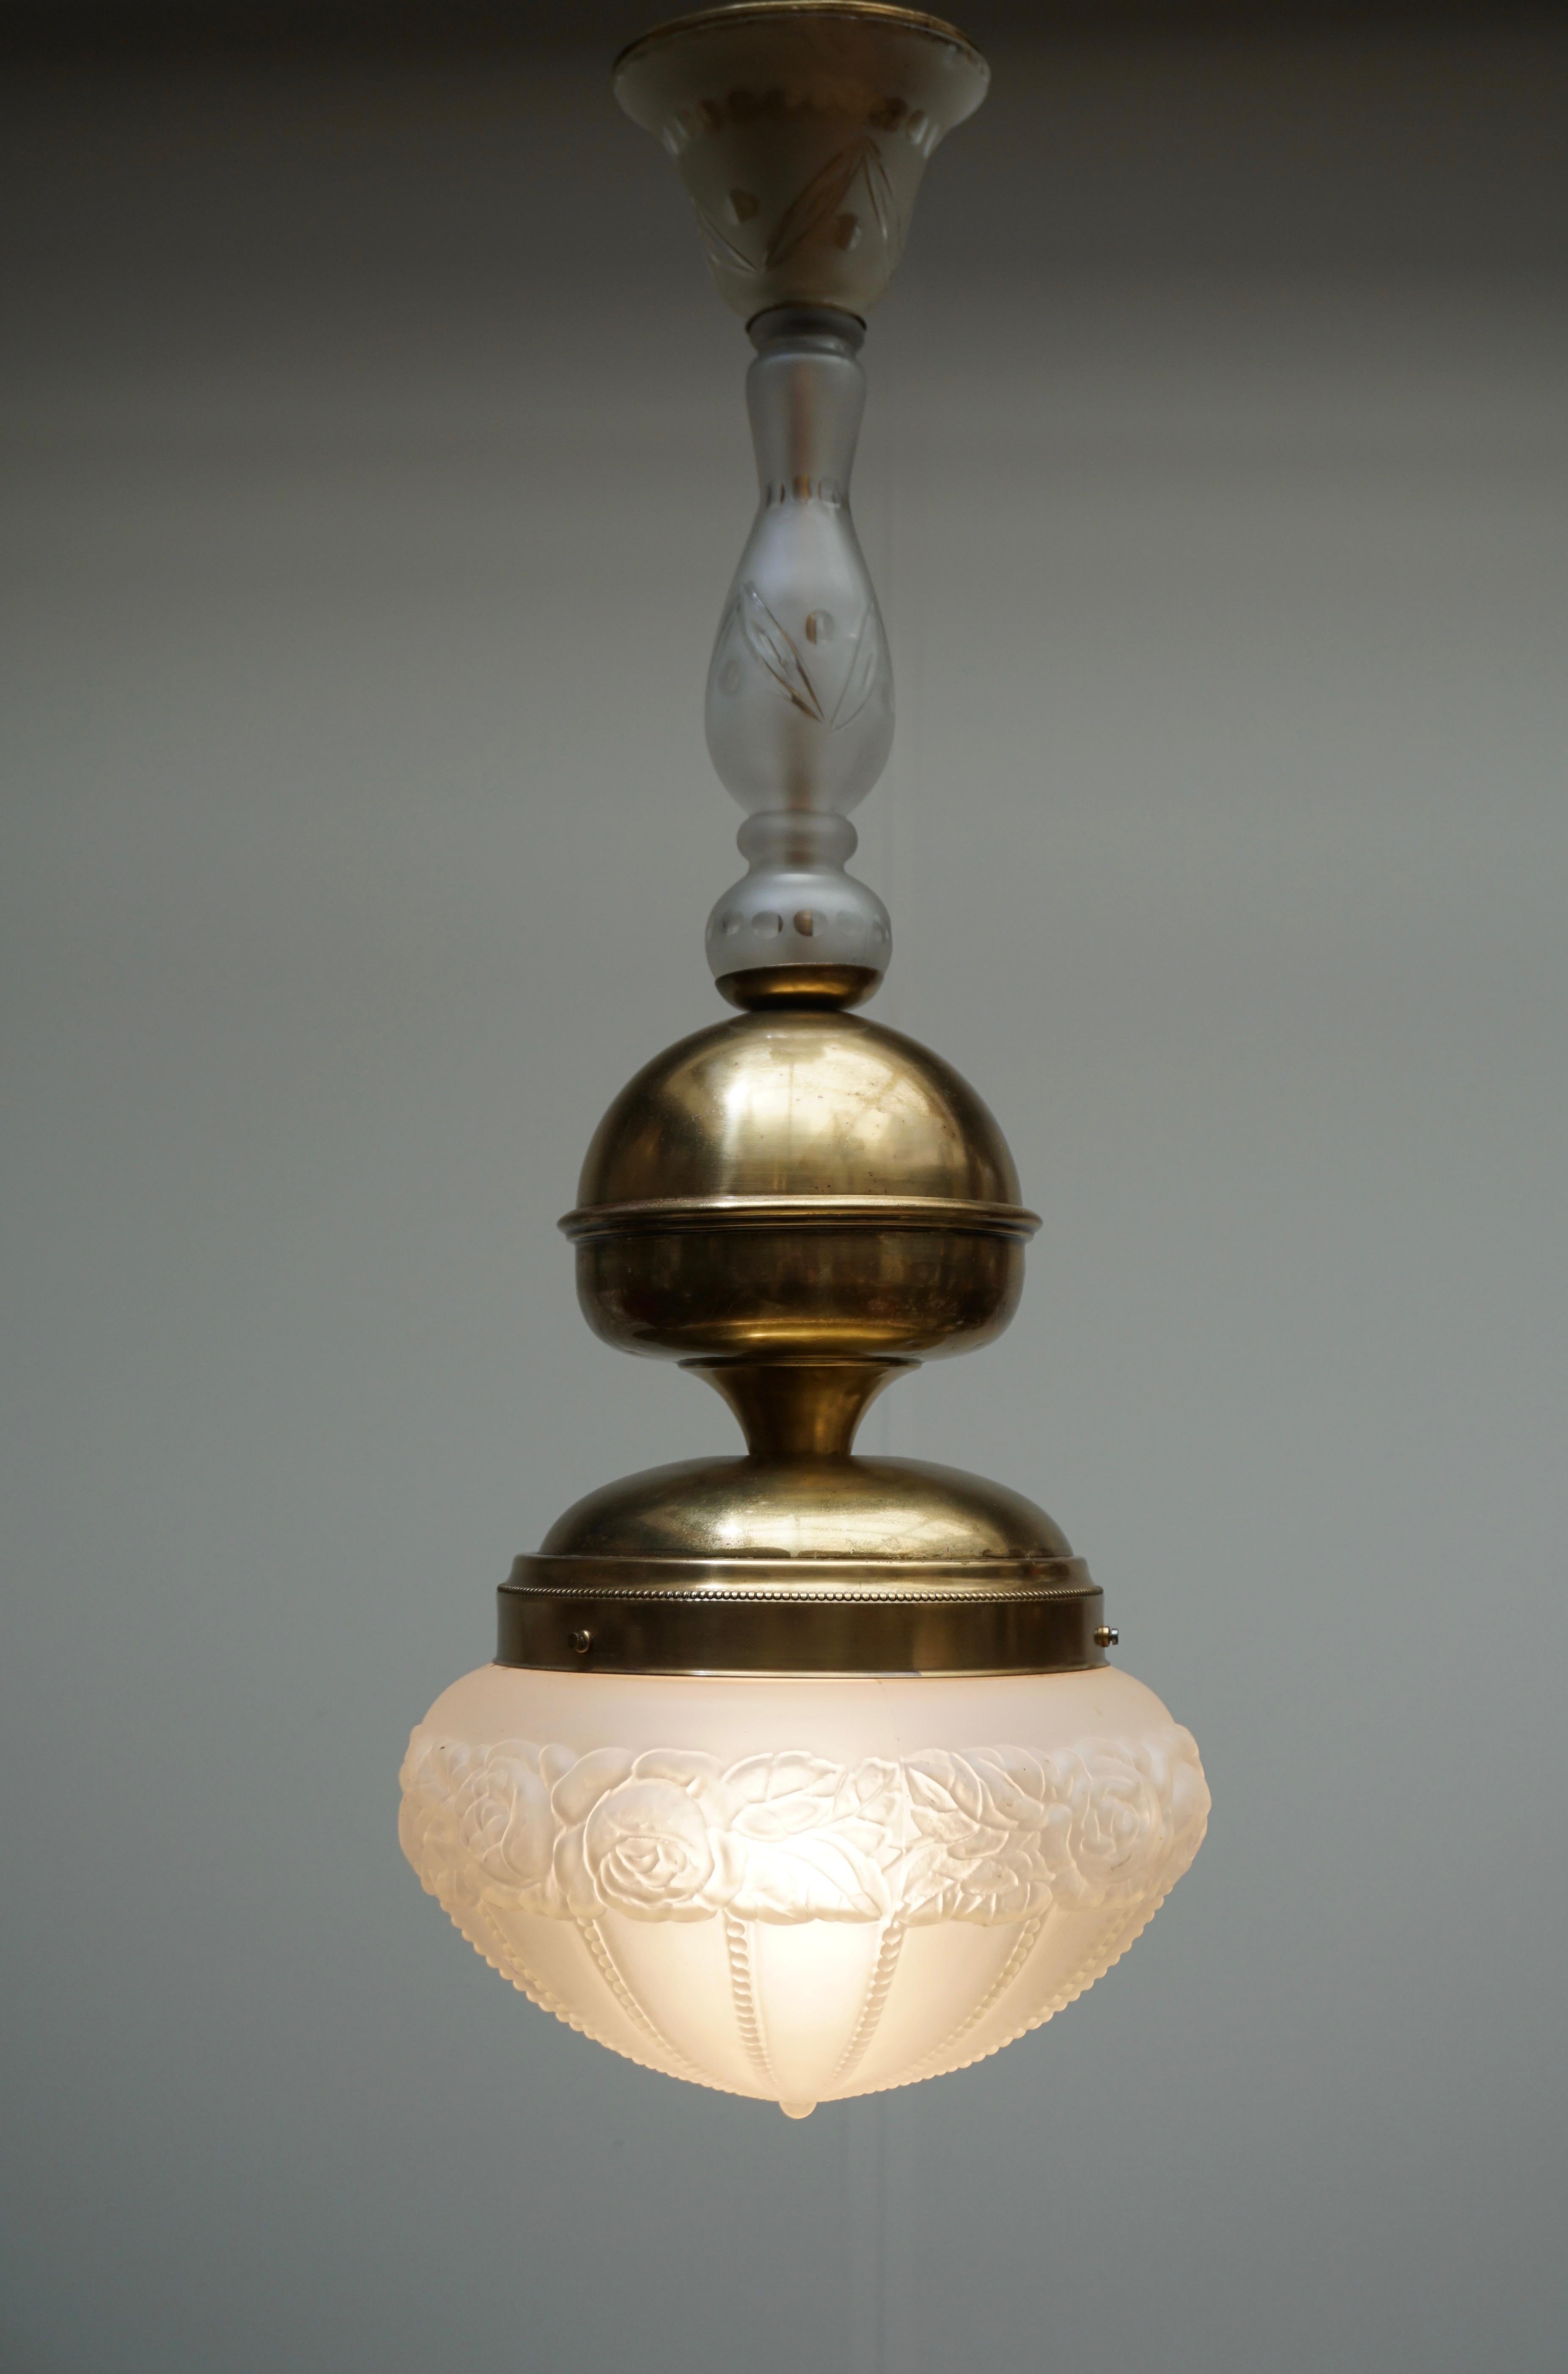 Italian Murano glass and brass pendant light.
Measures: Diameter 28 cm.
Height 70 cm.